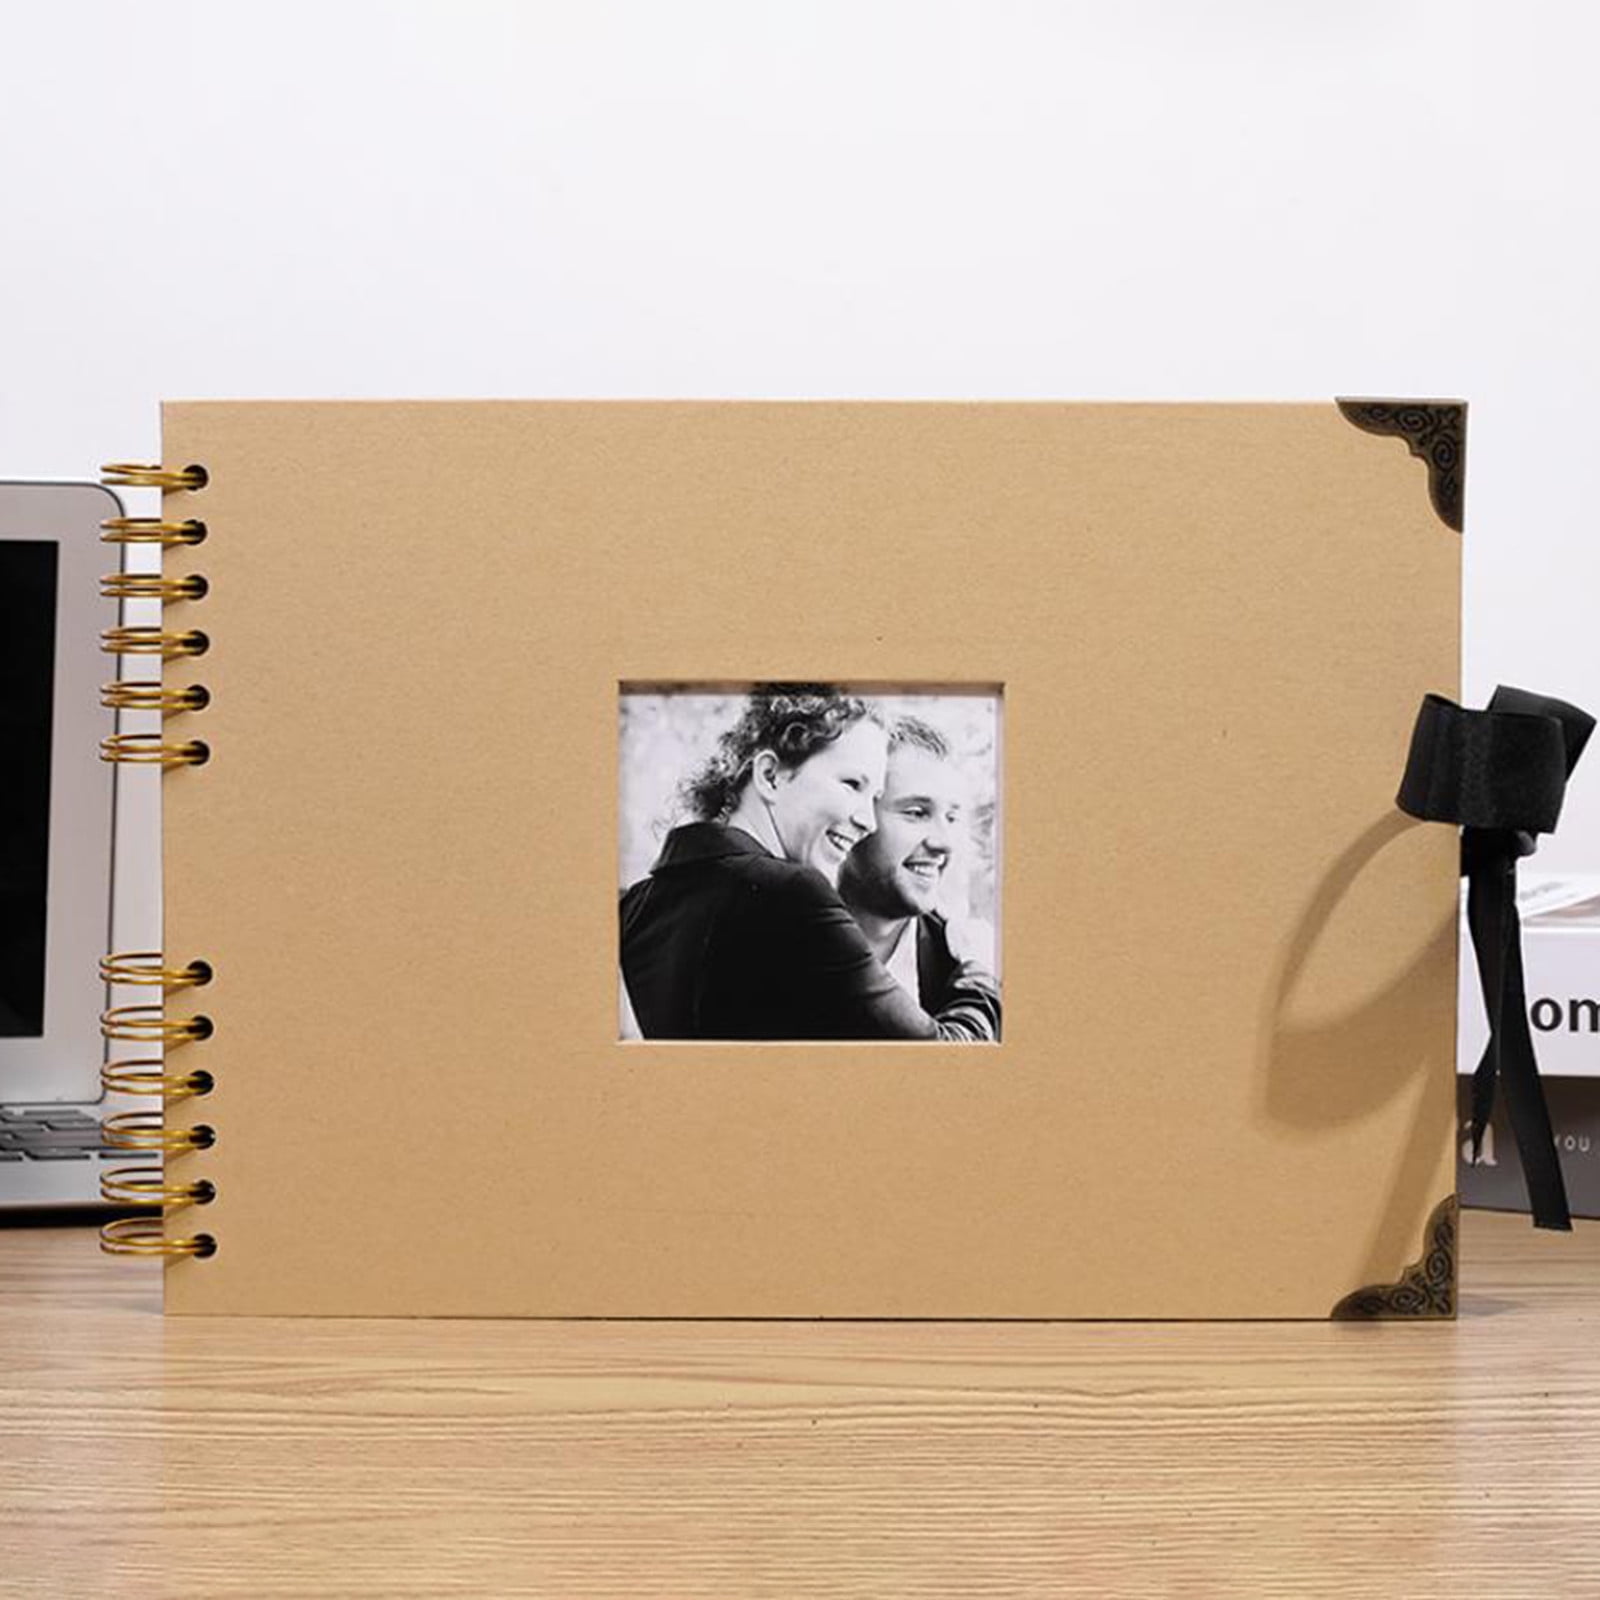 Wedding Album Box, Photo Book Presentation Box